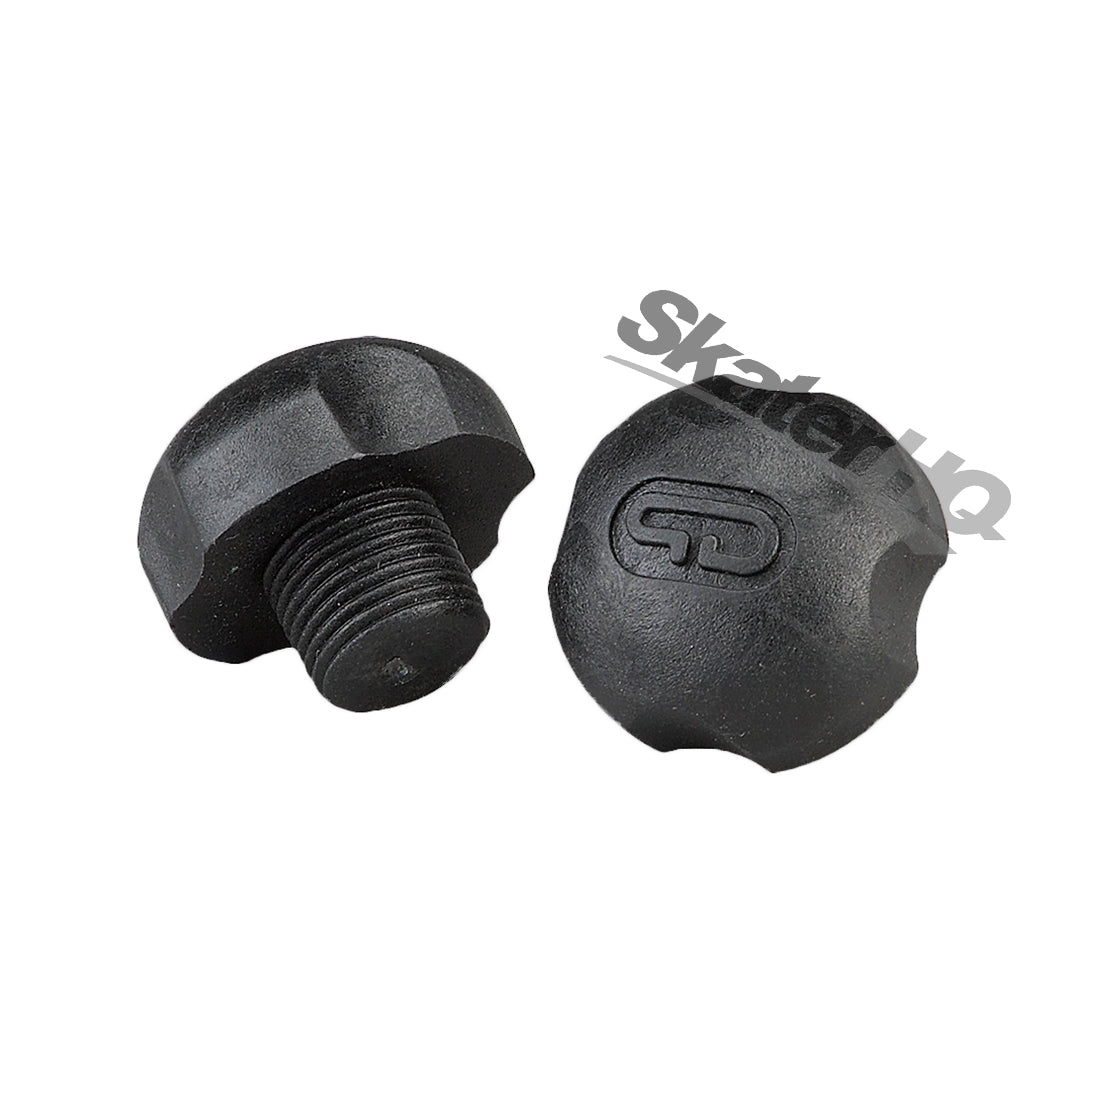 Powerdyne Jam Plug Pair - Black Roller Skate Hardware and Parts